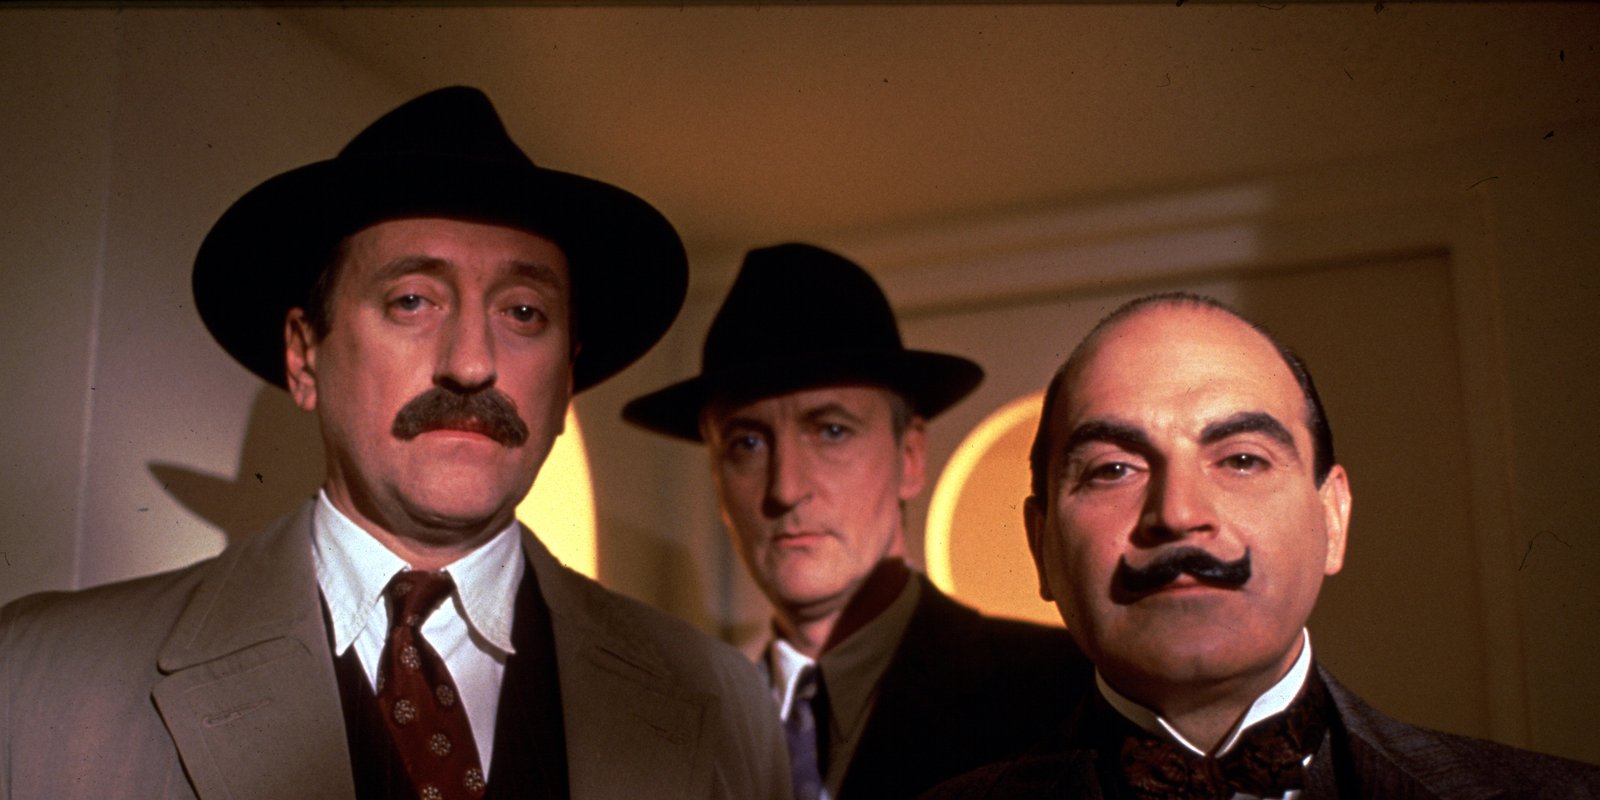 Agatha Christie - Poirot Collection 6